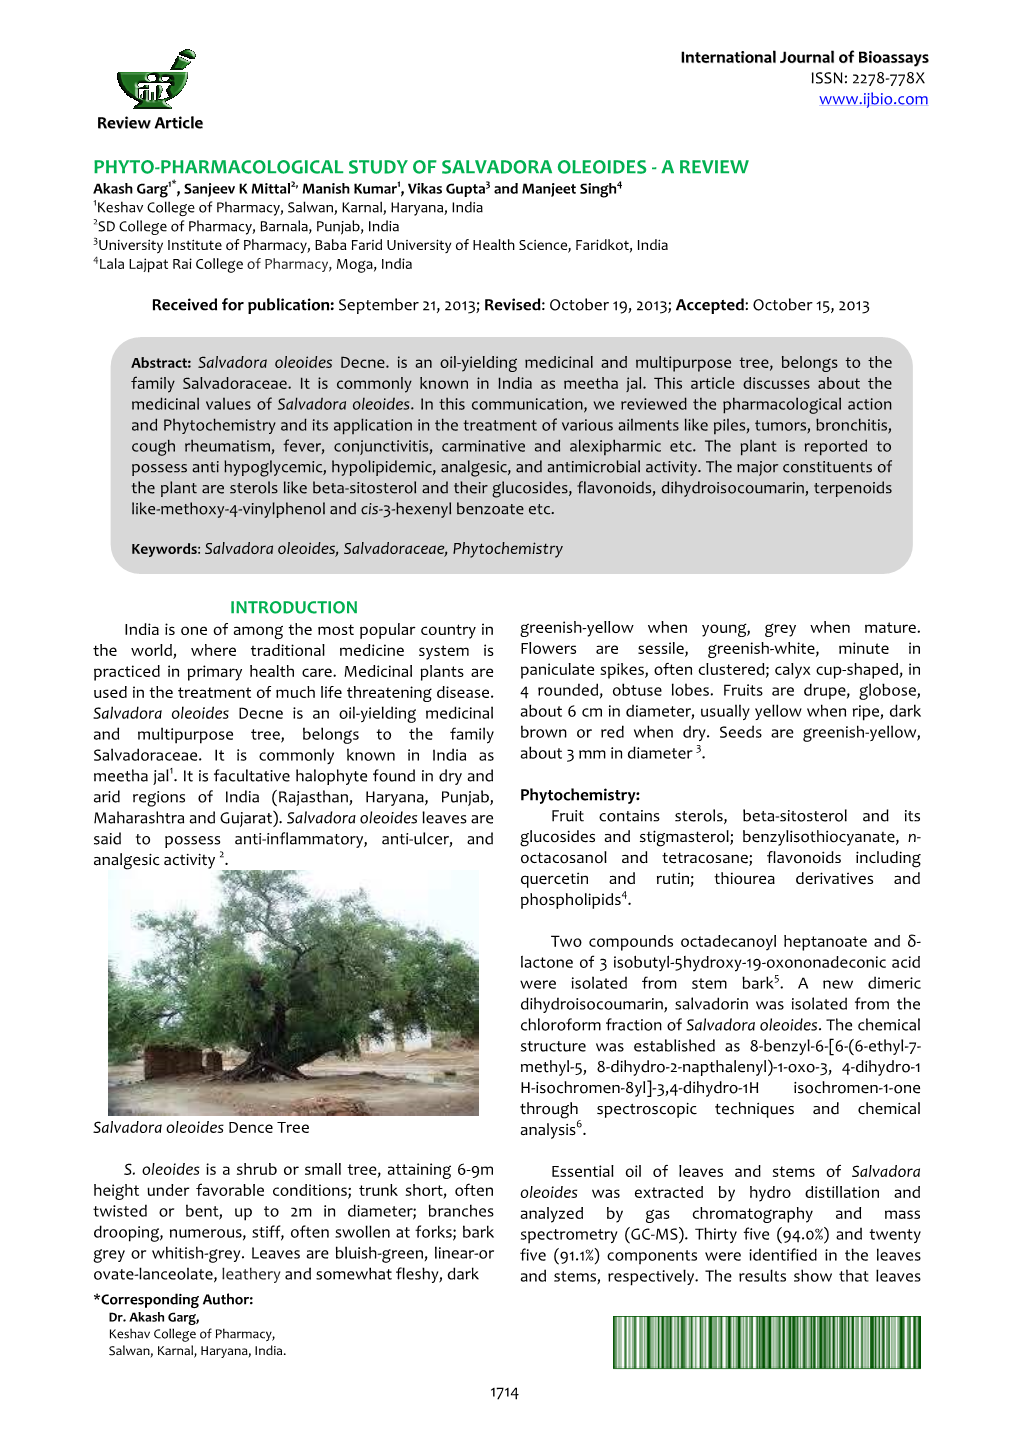 Phyto-Pharmacological Study of Salvadora Oleoides